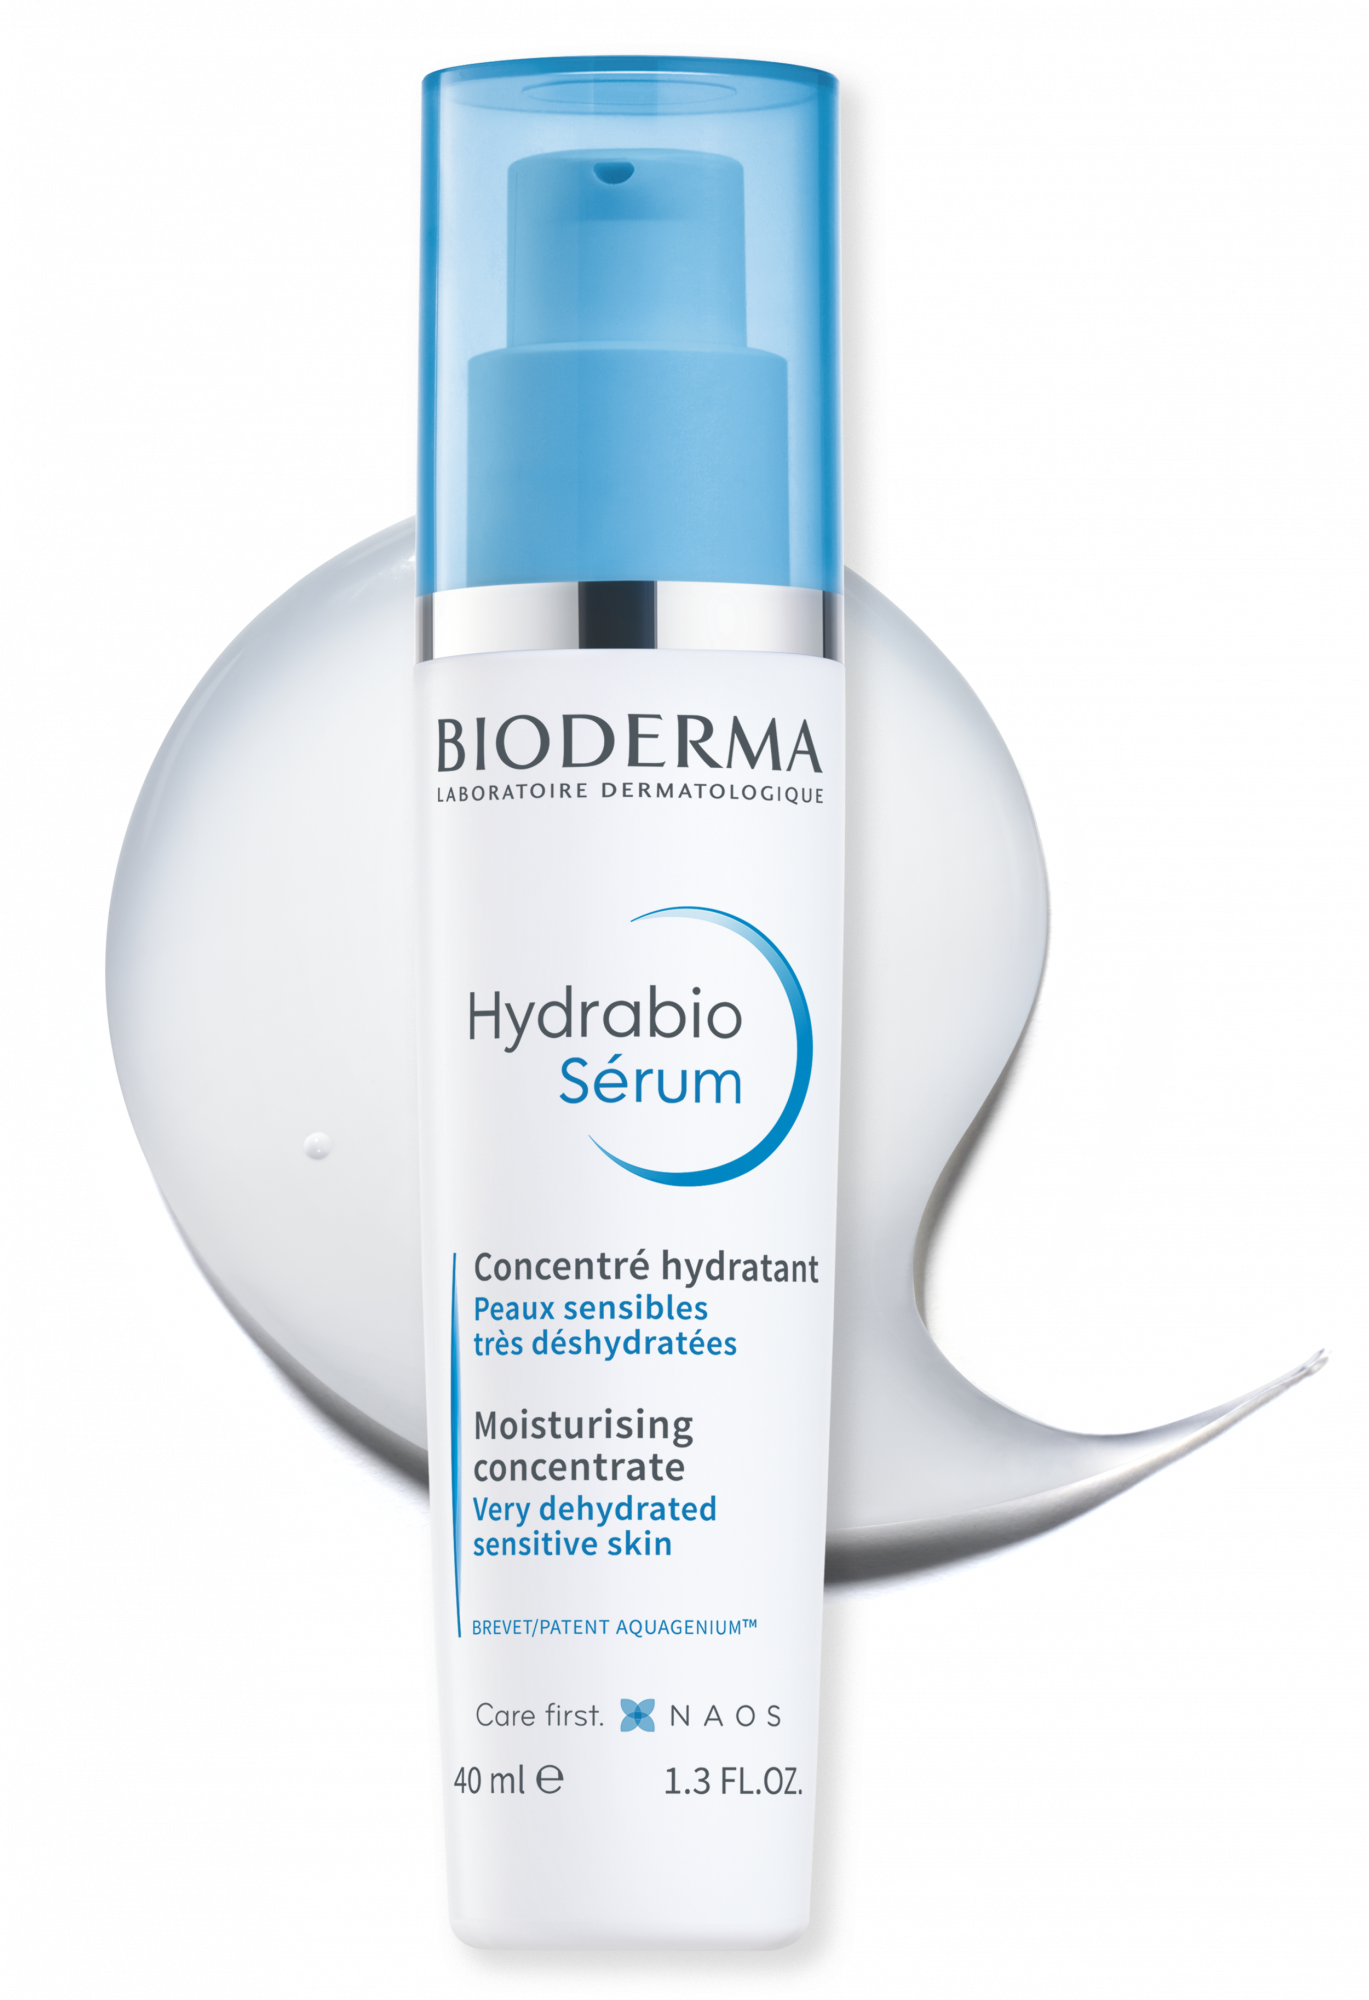 Bioderma - Hydrabio - Hydration Facial Serum - Skin Soothing and Moisturizing